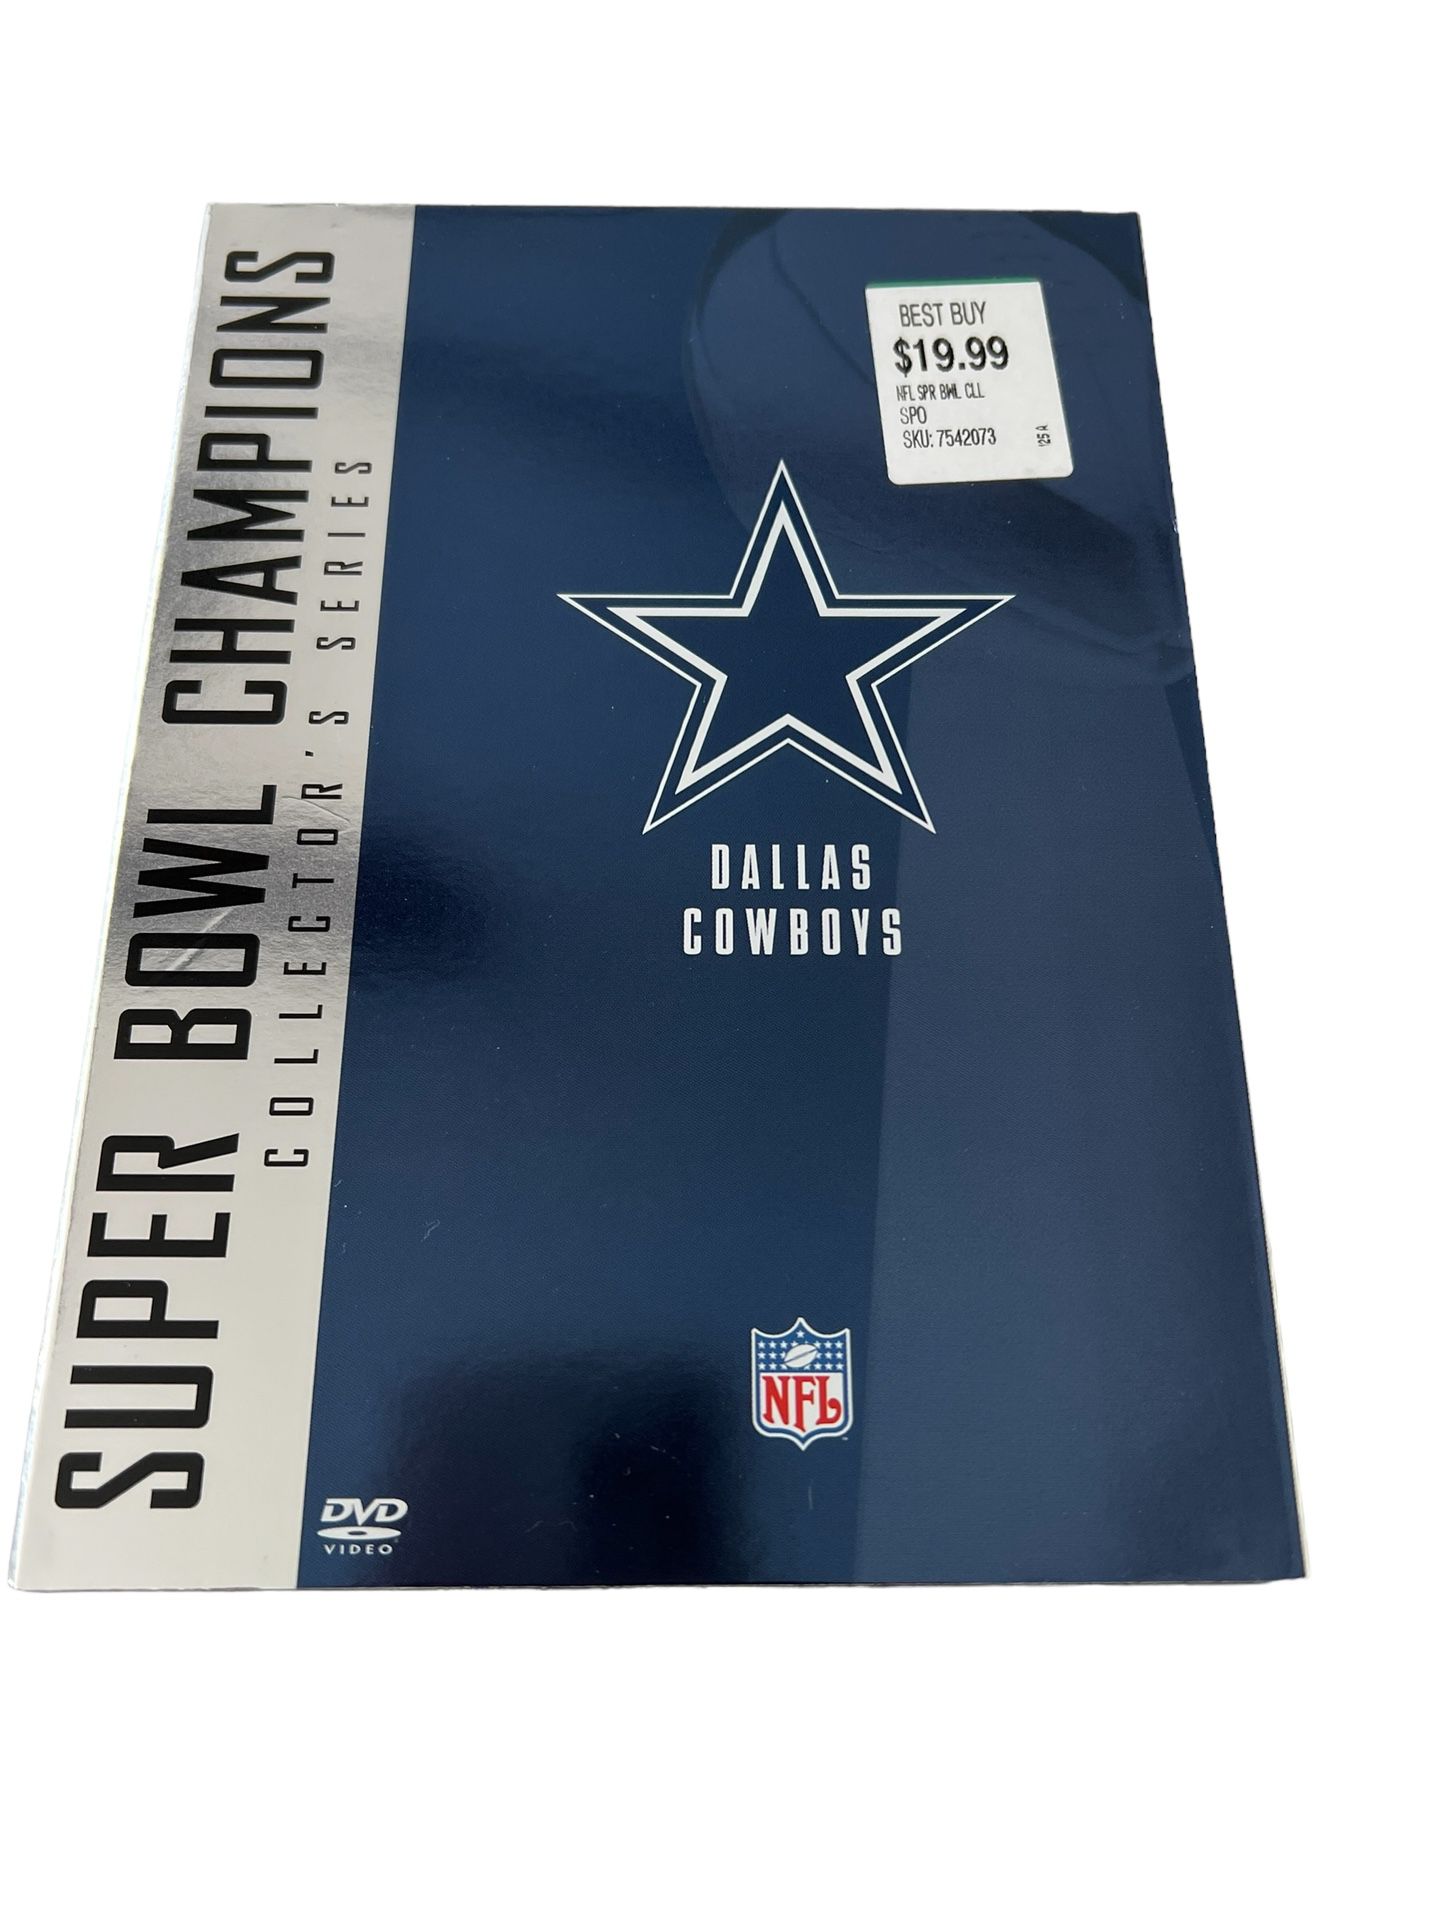 NFL Super Bowl Collection: Dallas Cowboys (DVD)